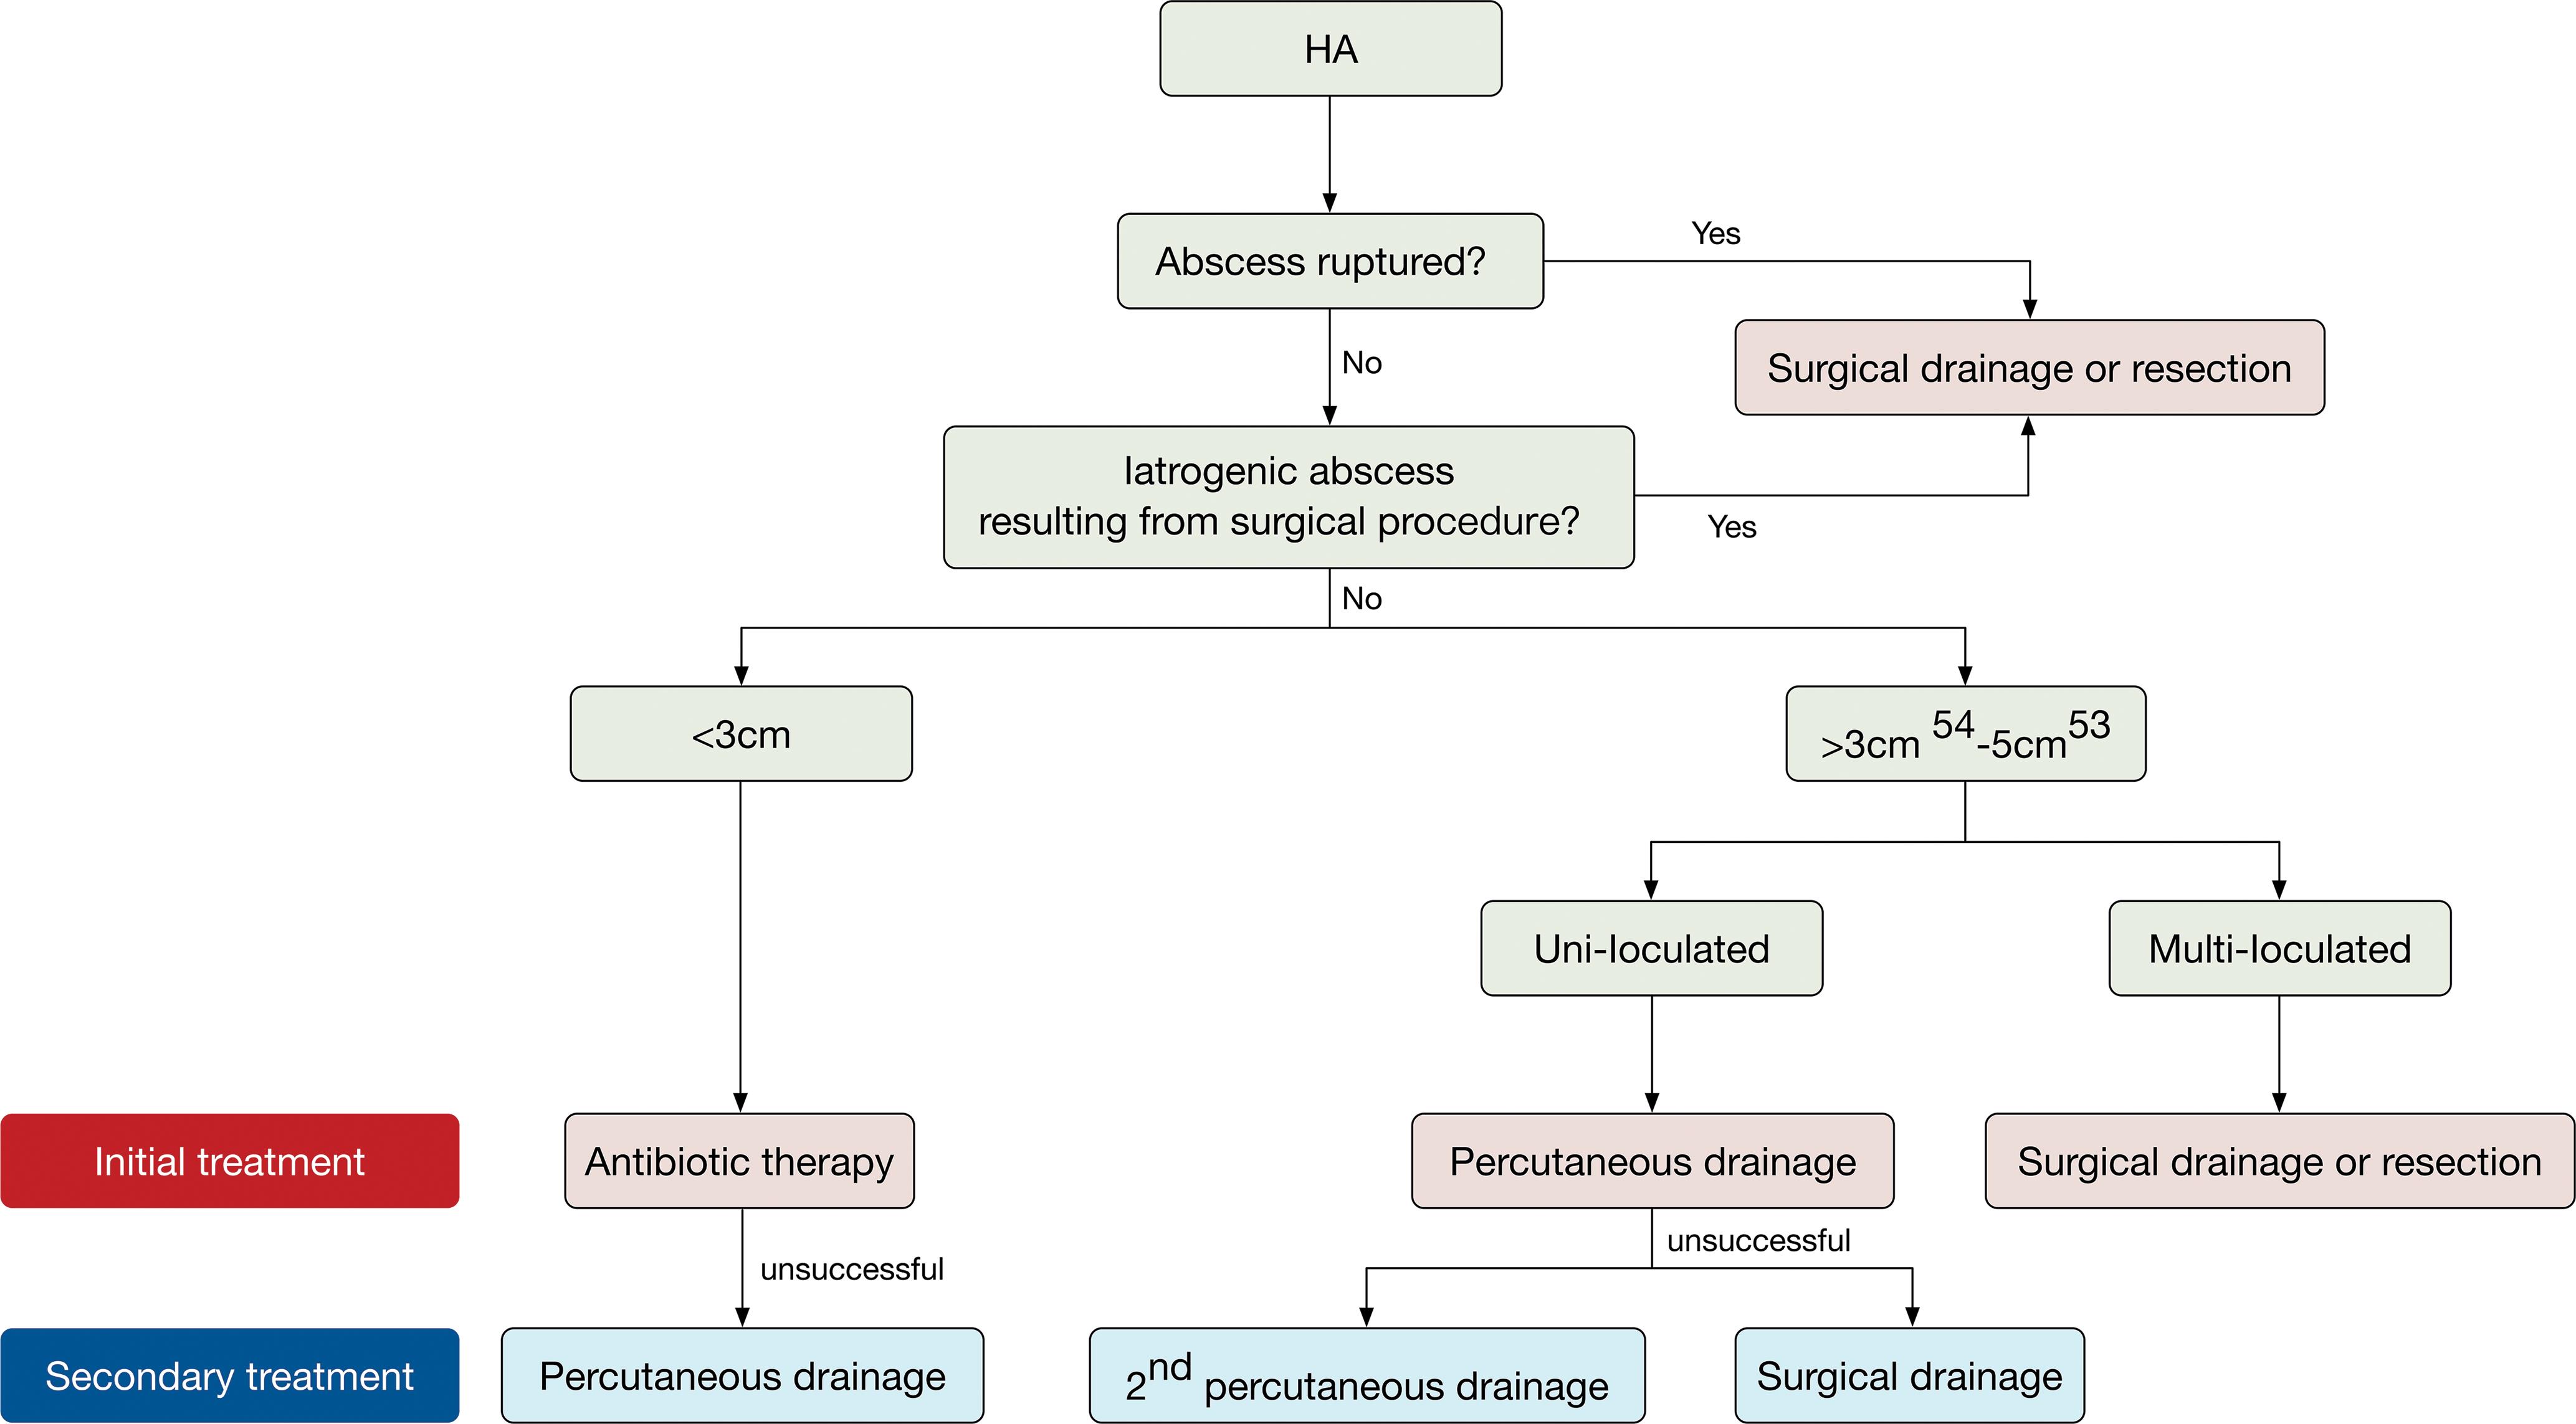 Treatment strategies of HA*.